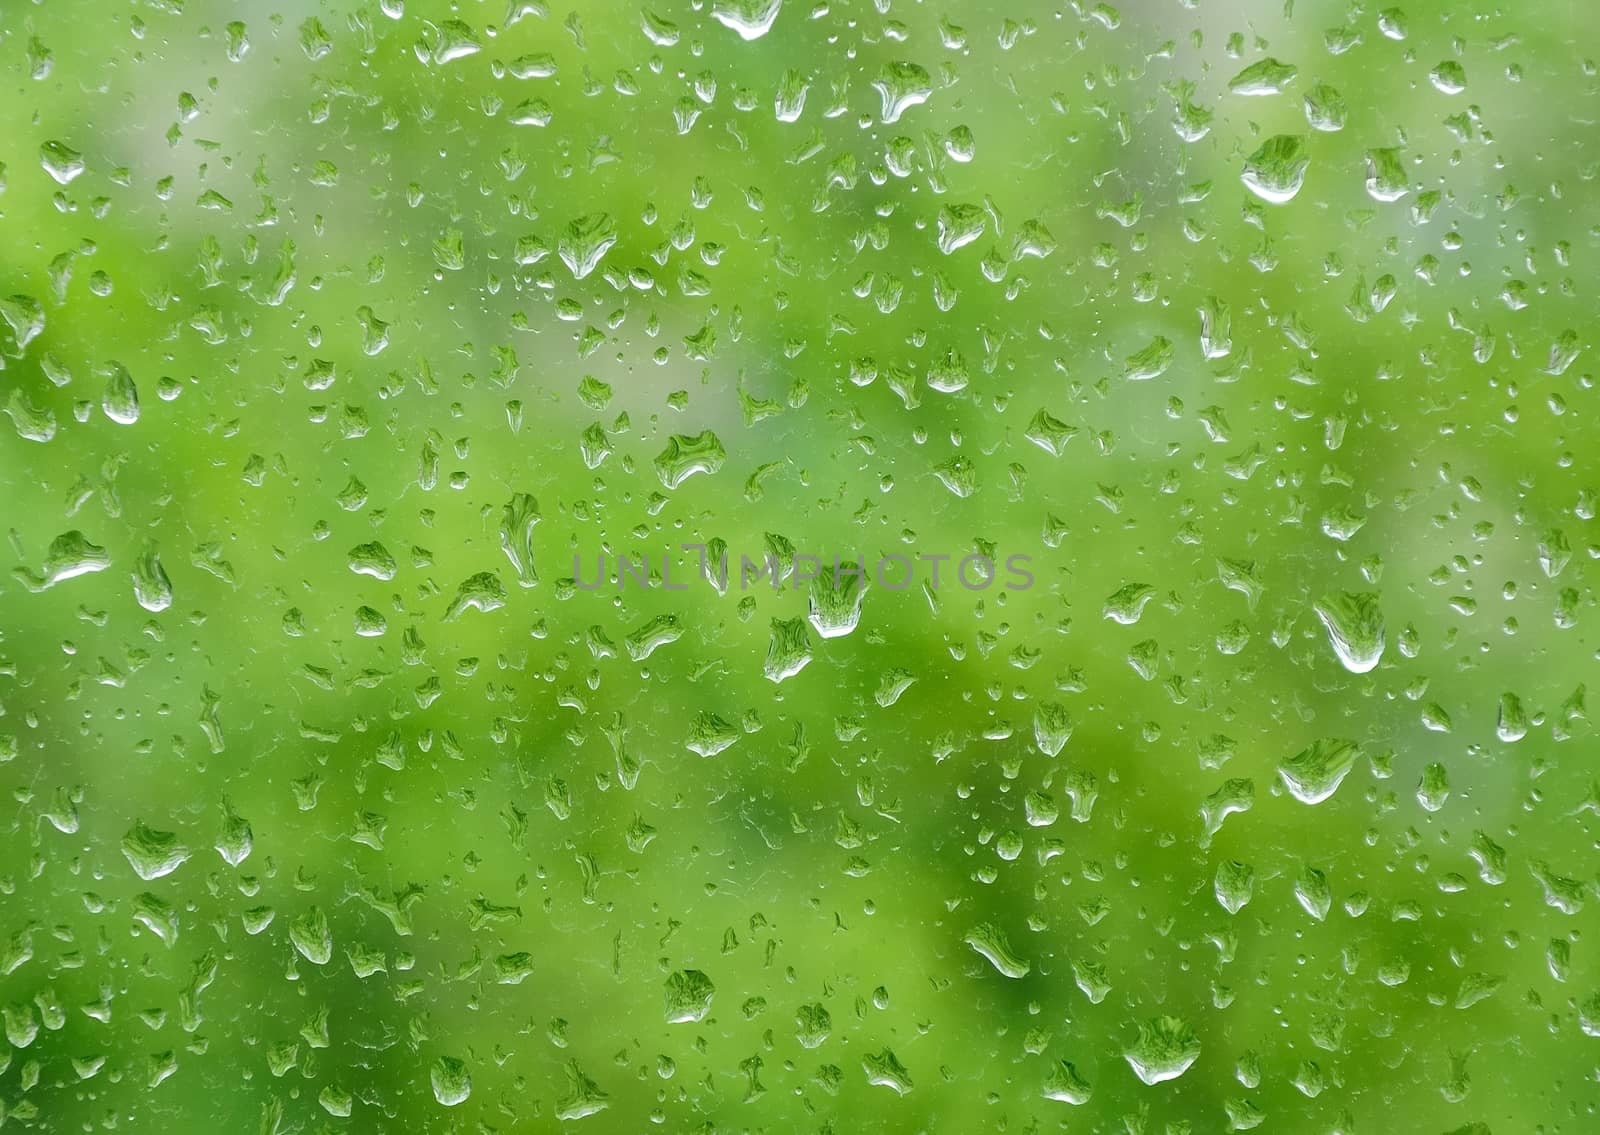 raindrops on window nice bokeh in background